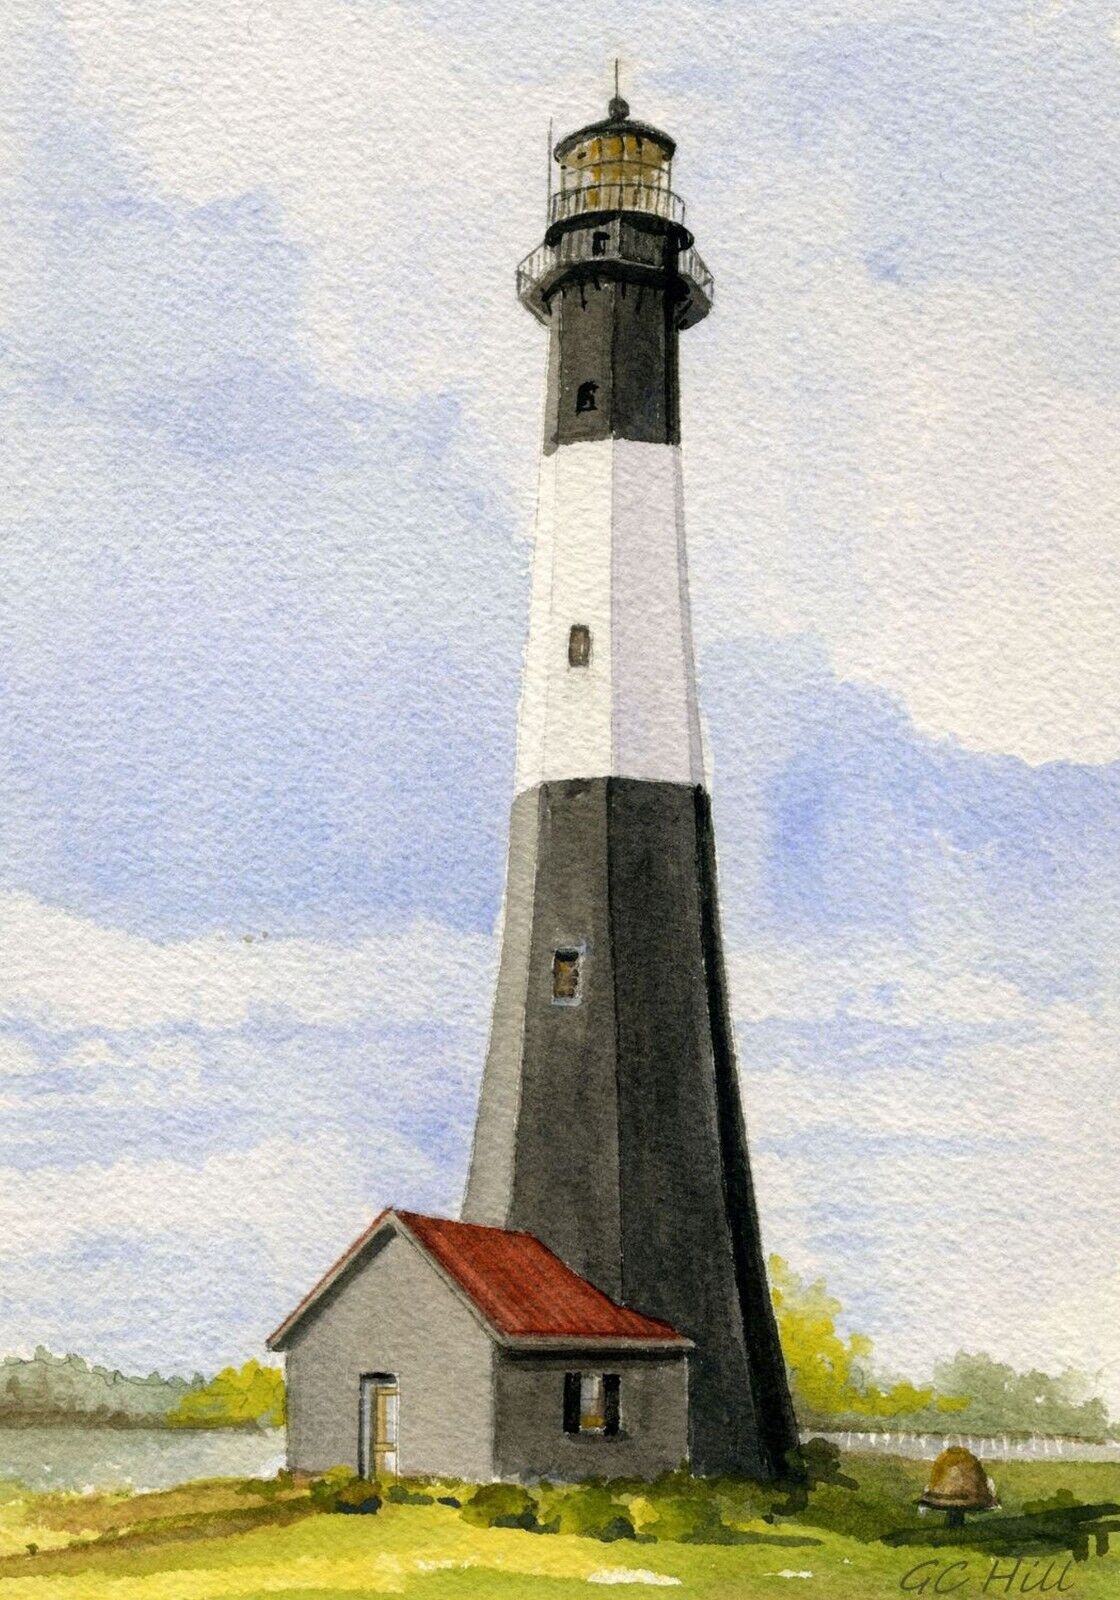 Tybee Island Lighthouse Georgia Fridge Magnet. Gerald Hill watercolor portrait